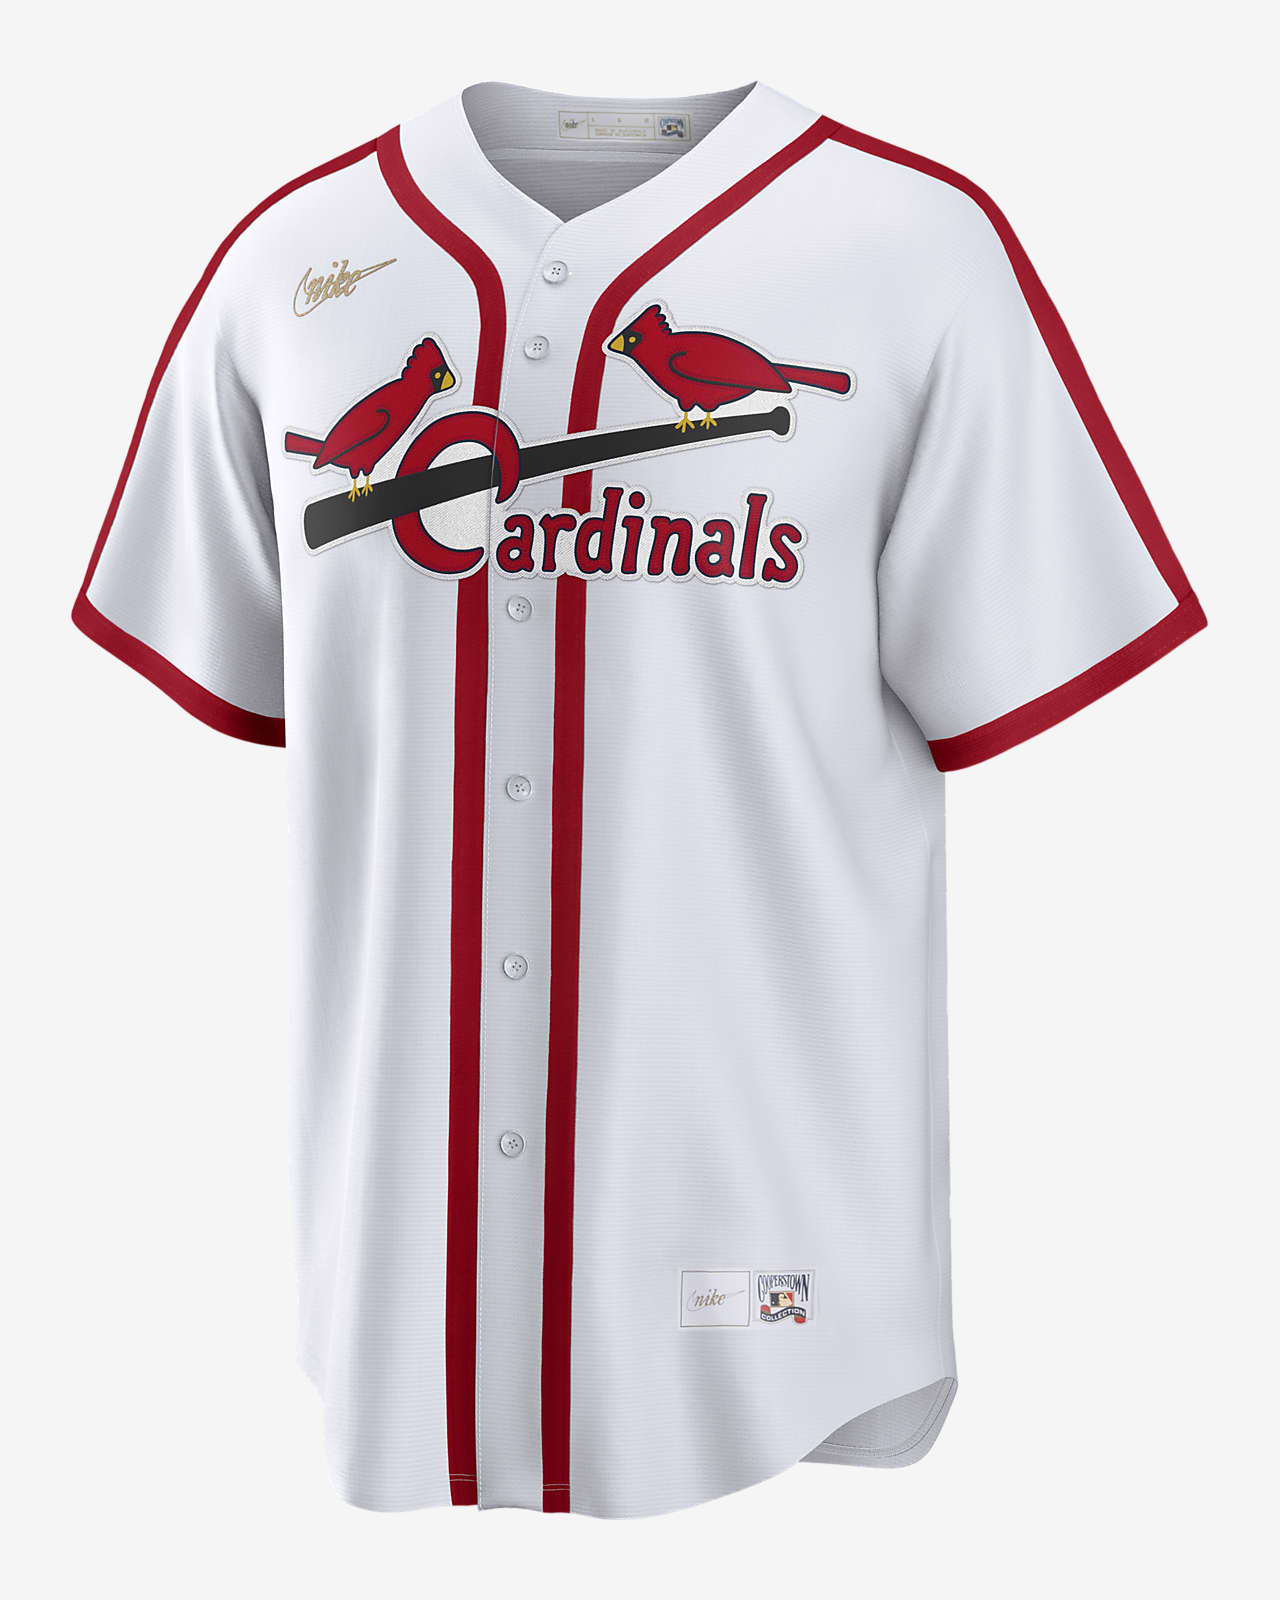 MLB St. Louis Cardinals (Stan Musial) Men's Cooperstown Baseball Jersey